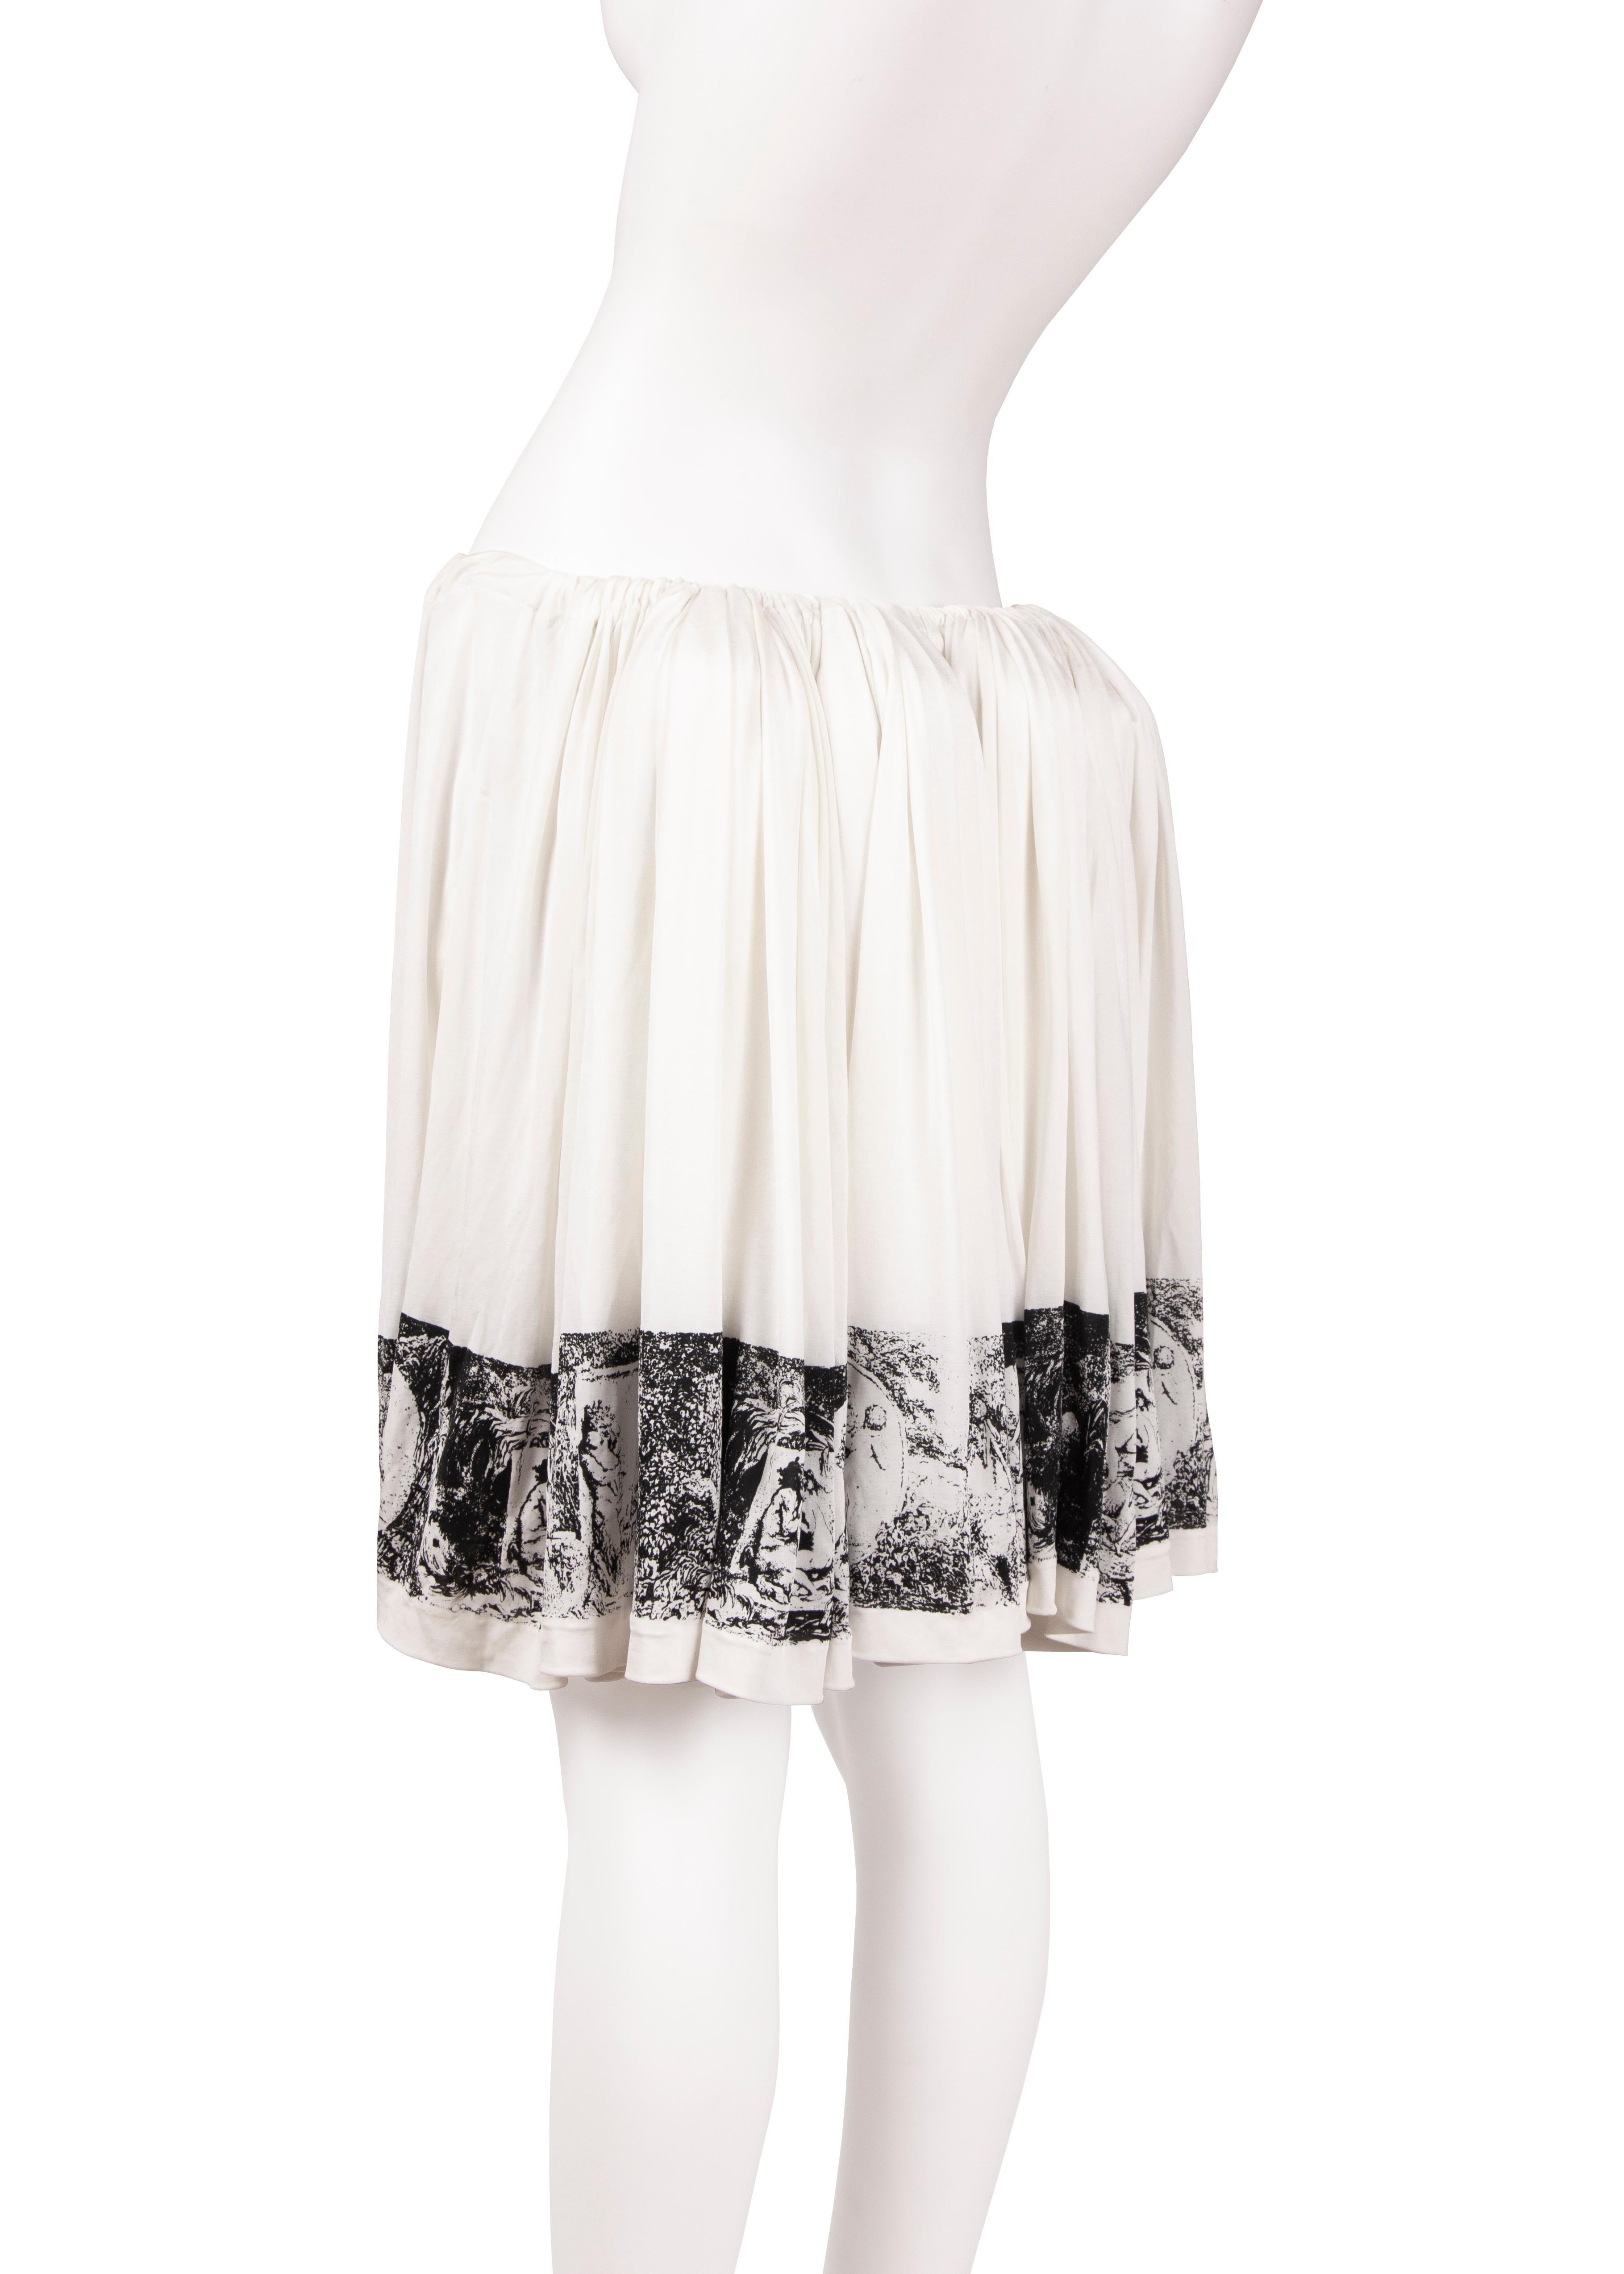 Vivienne Westwood 'Pagan' bustle skirt, ss 1988 1